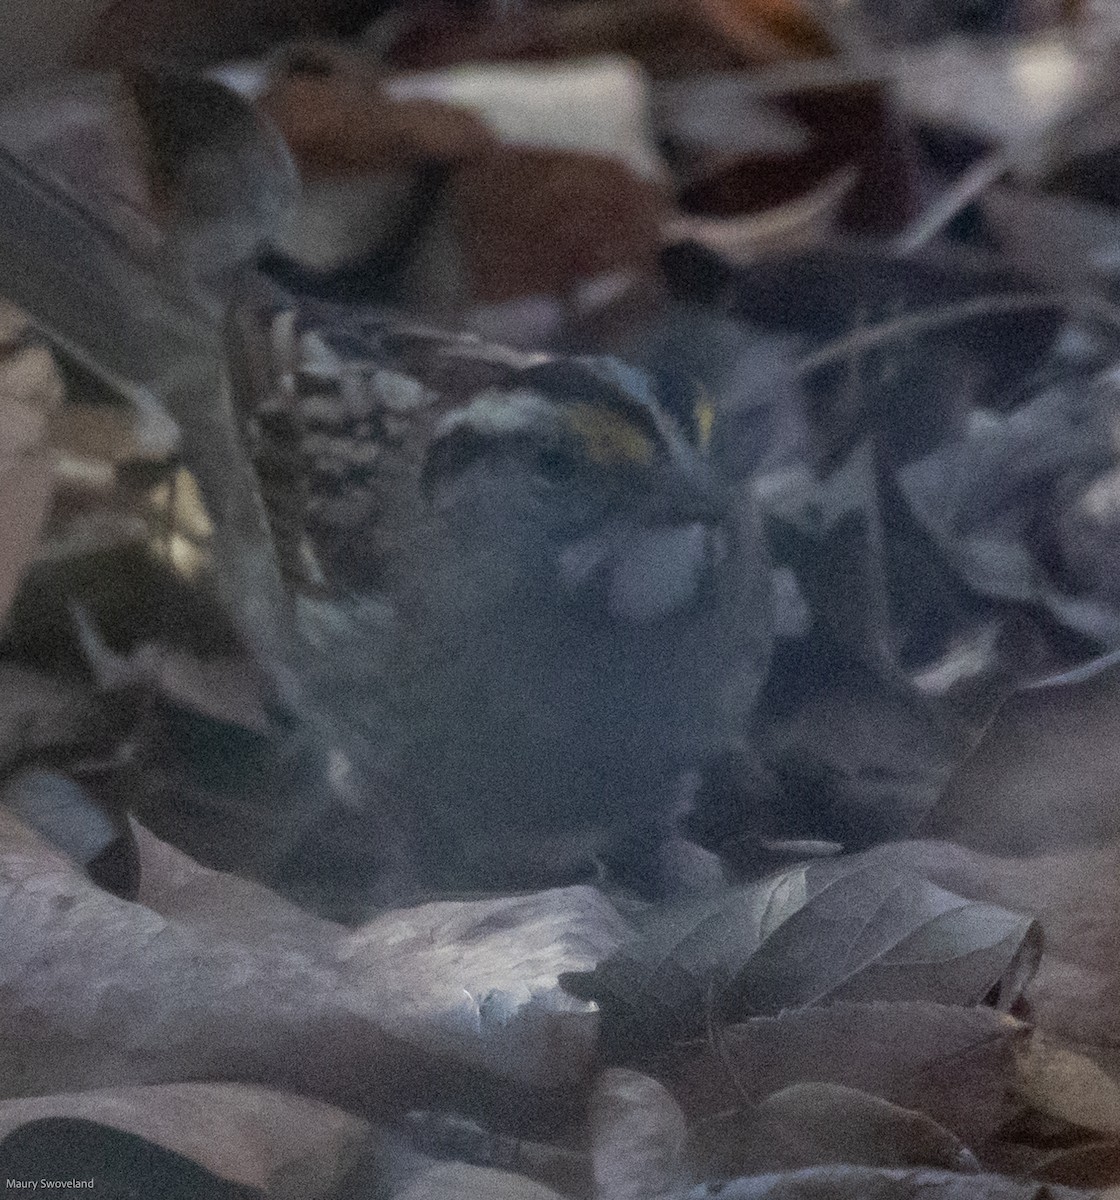 White-throated Sparrow - Maury Swoveland